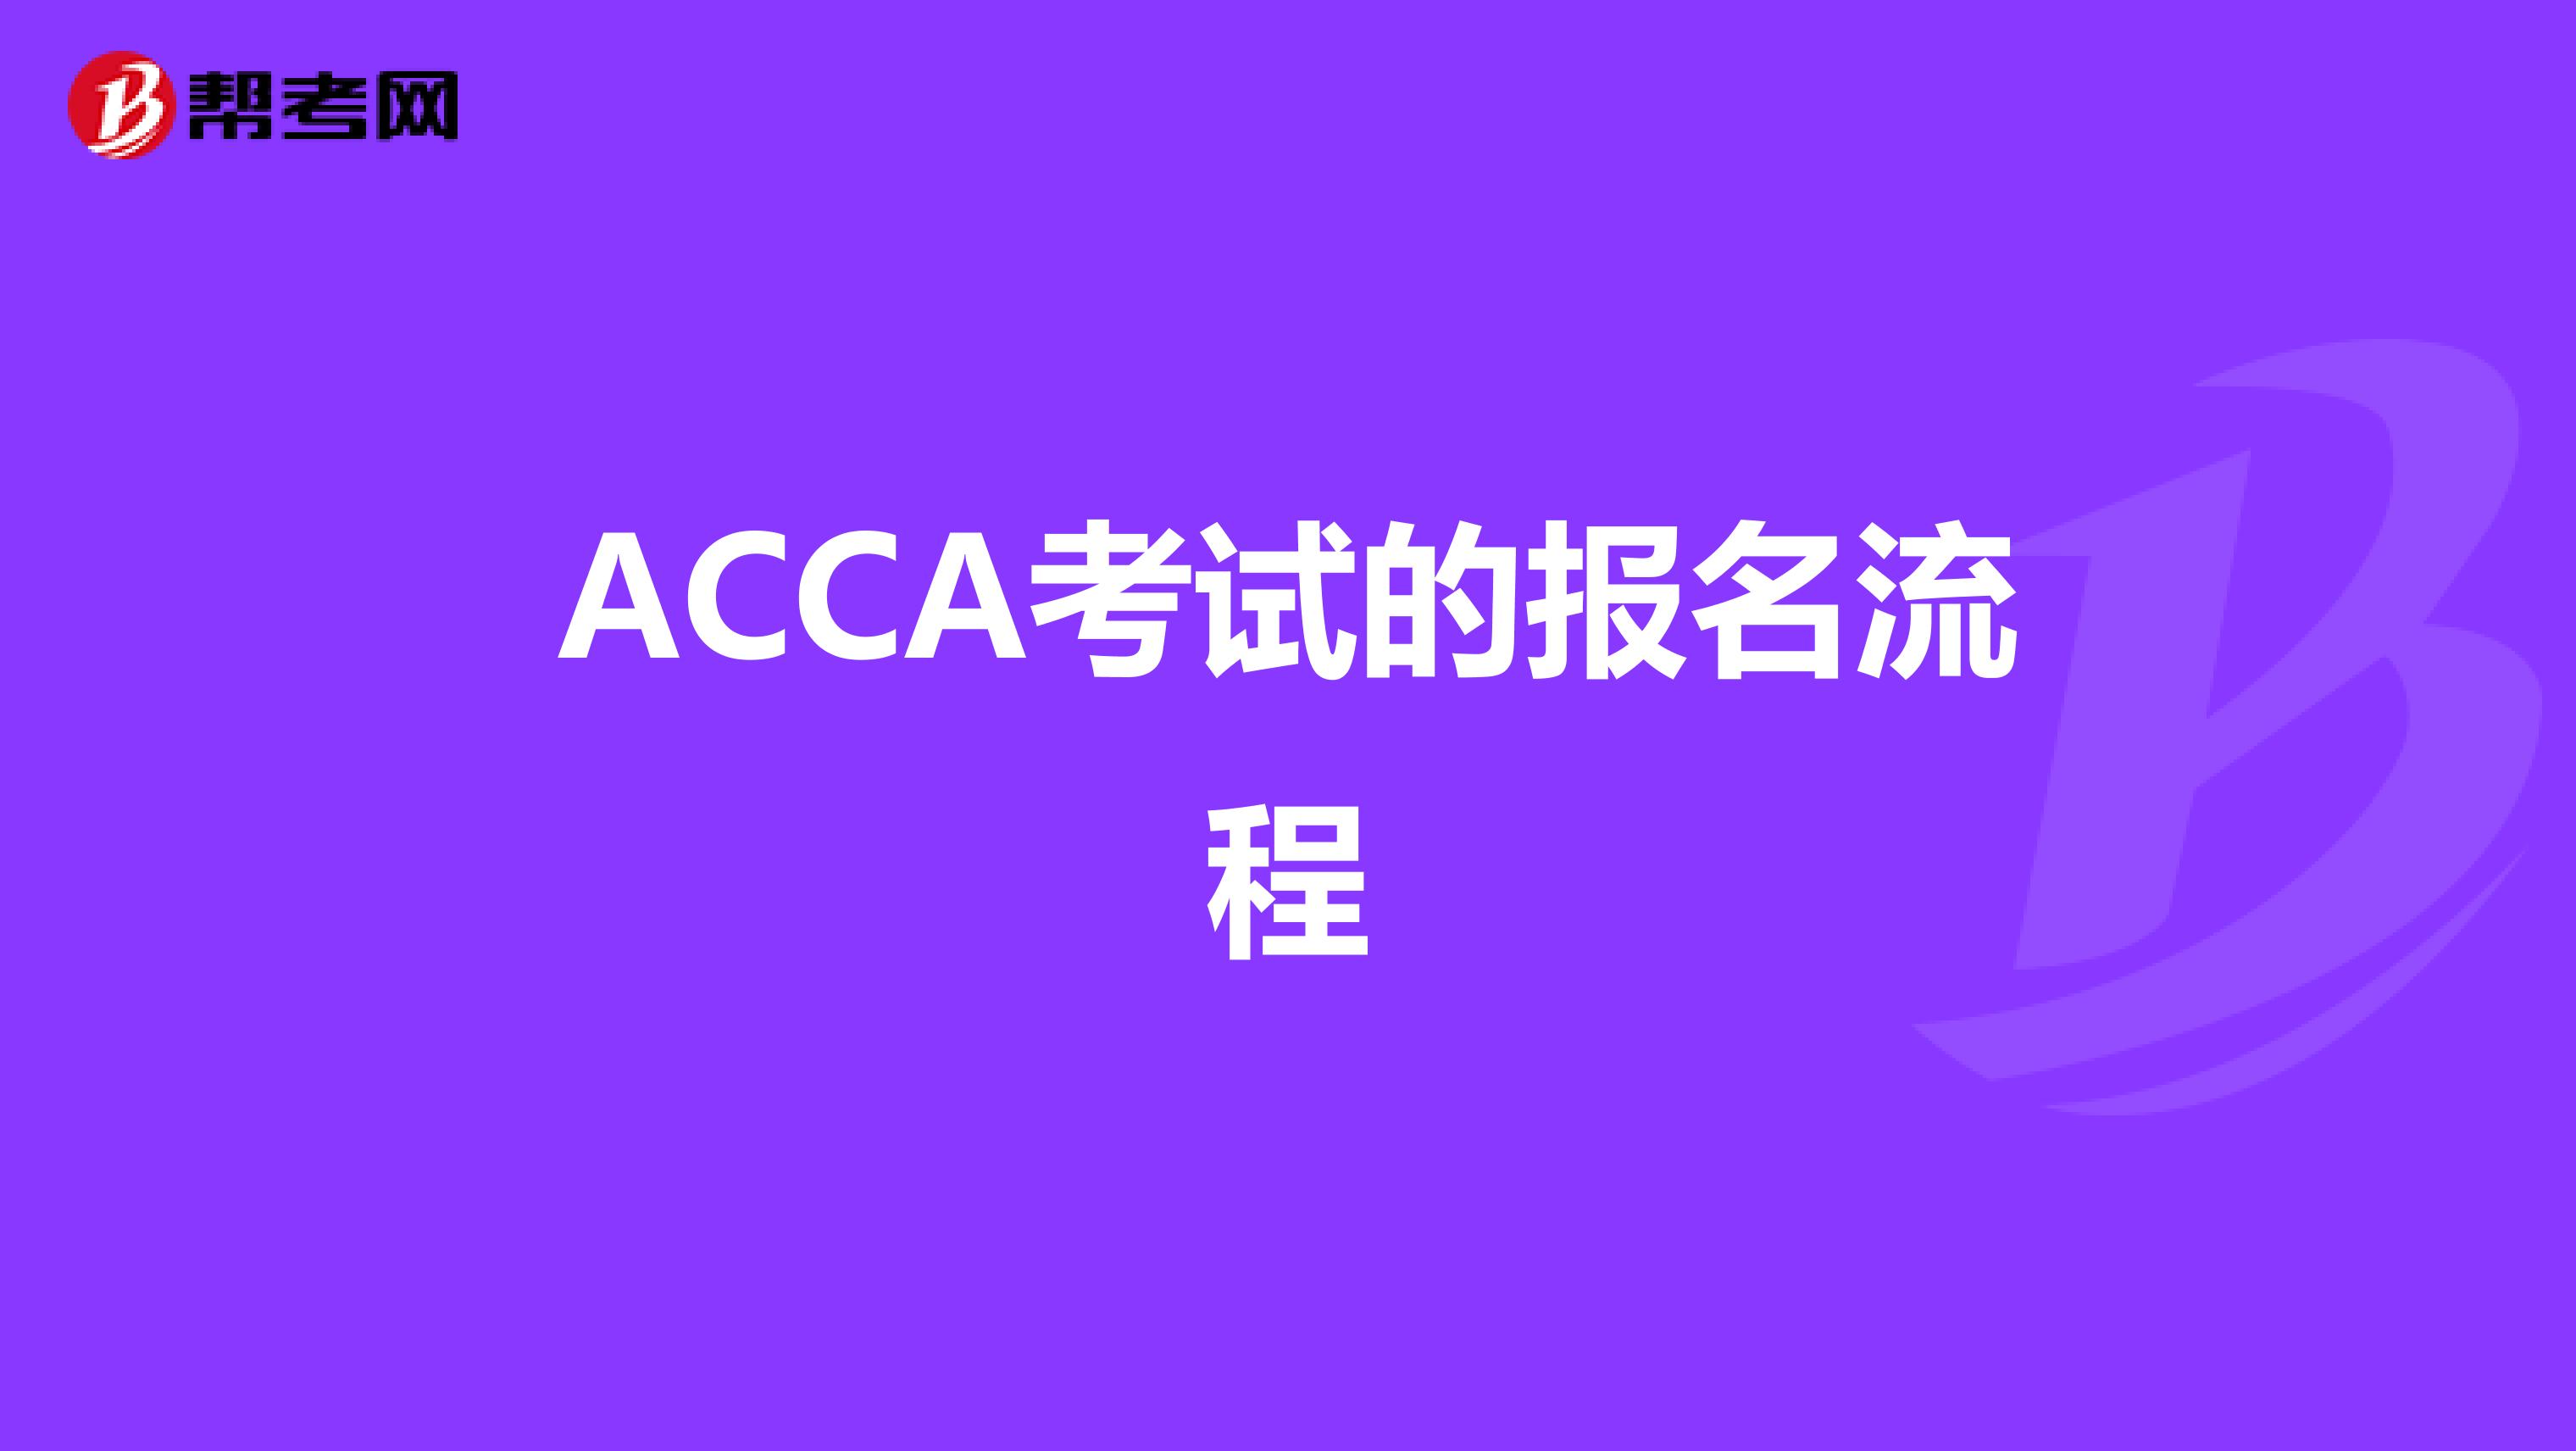 ACCA考试的报名流程